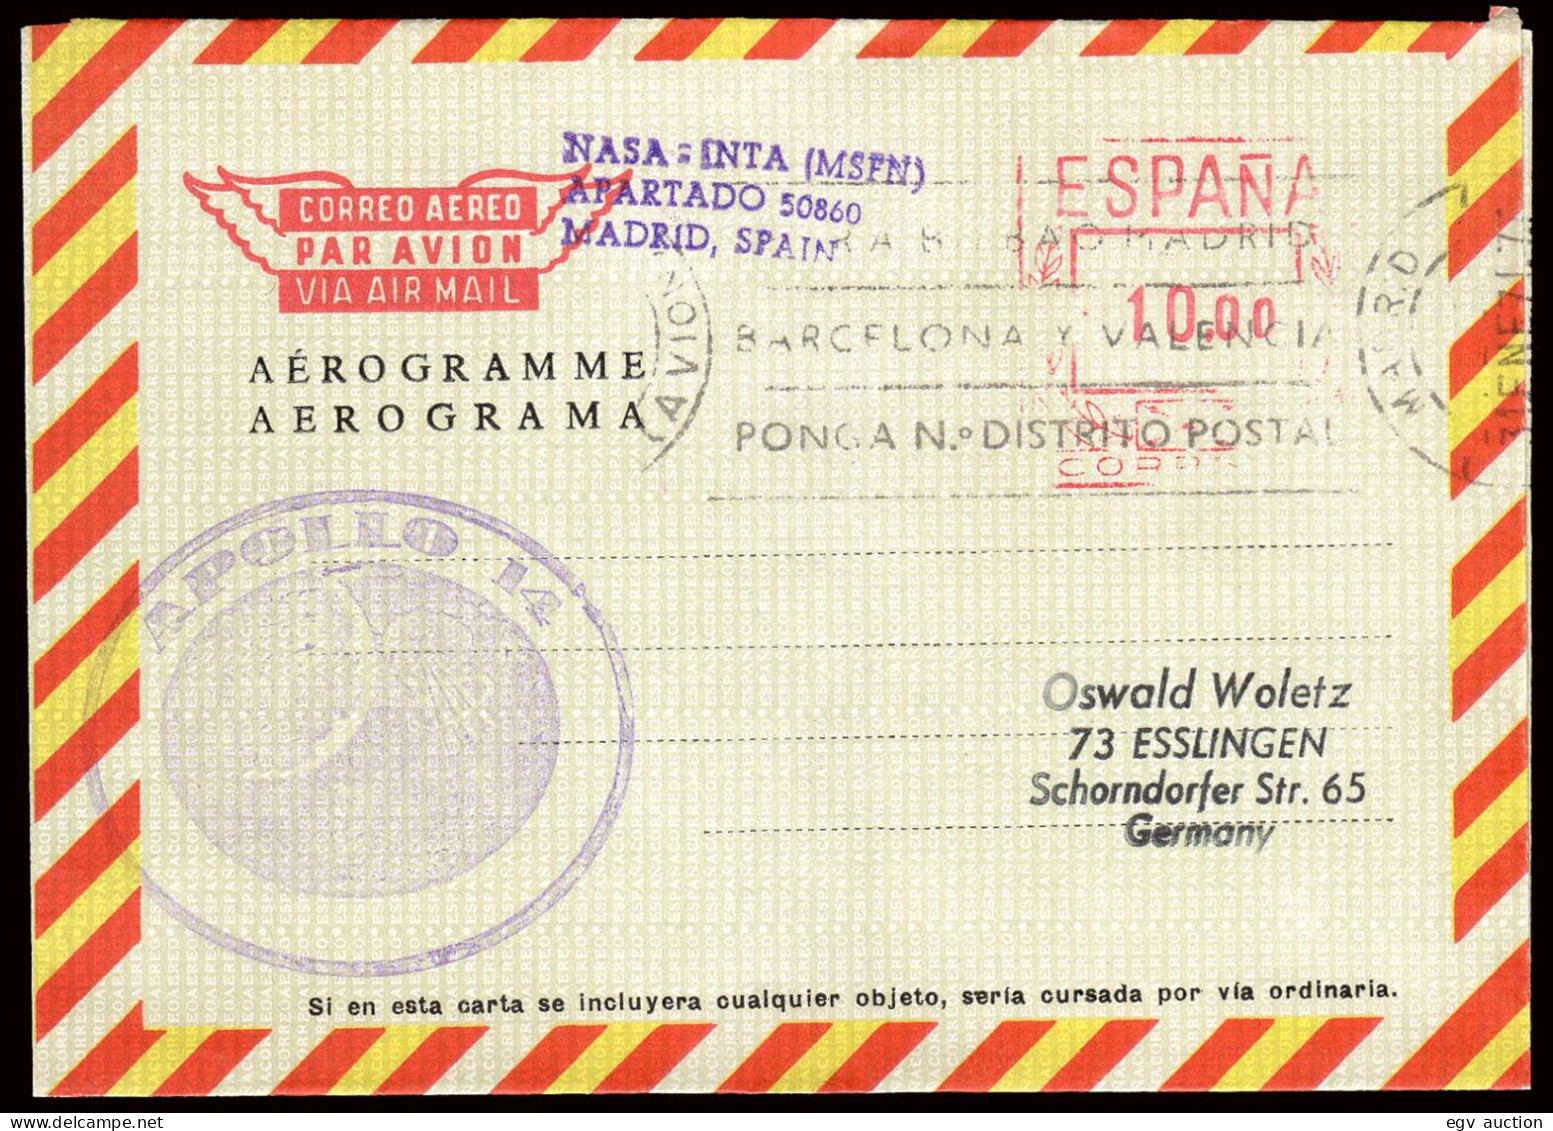 Aerograma - Edi O 103 - 1971 - De Madrid A Alemania 31/1/71 + Marca "Apollo 14" + Remite "Nasa - Madrid" - Cartas & Documentos